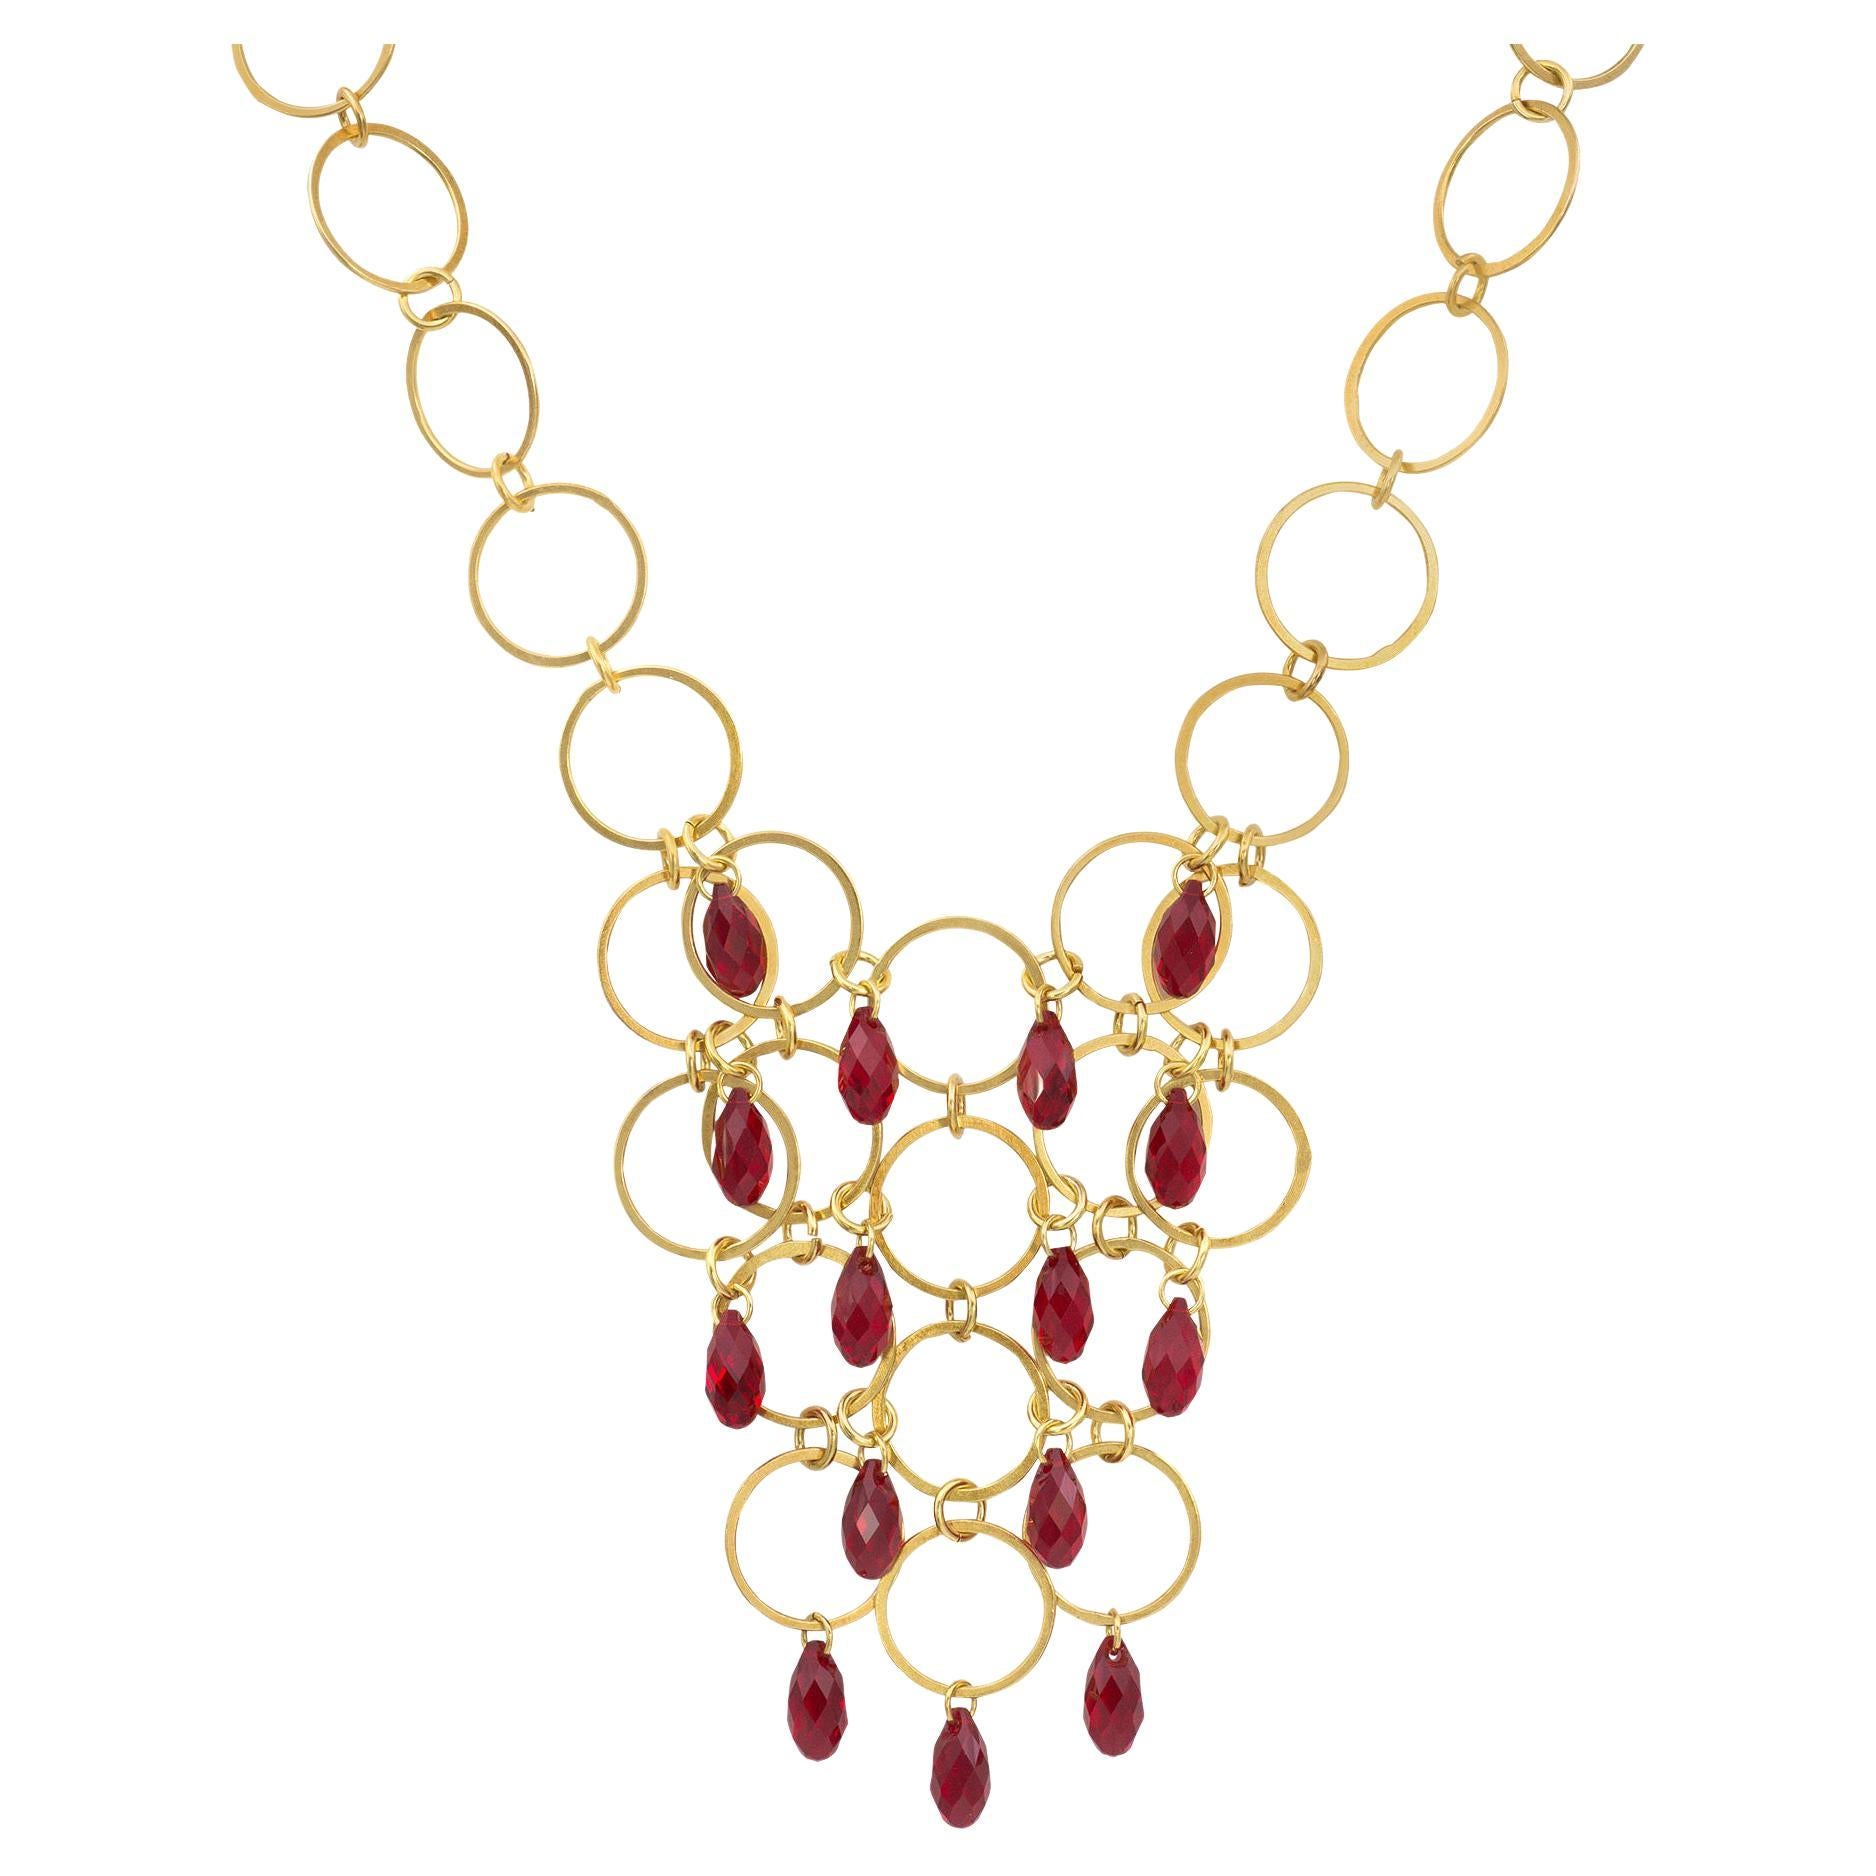 18k Gold Vermeil multi Hoop Bib Necklace with Red Swarovski Crystals